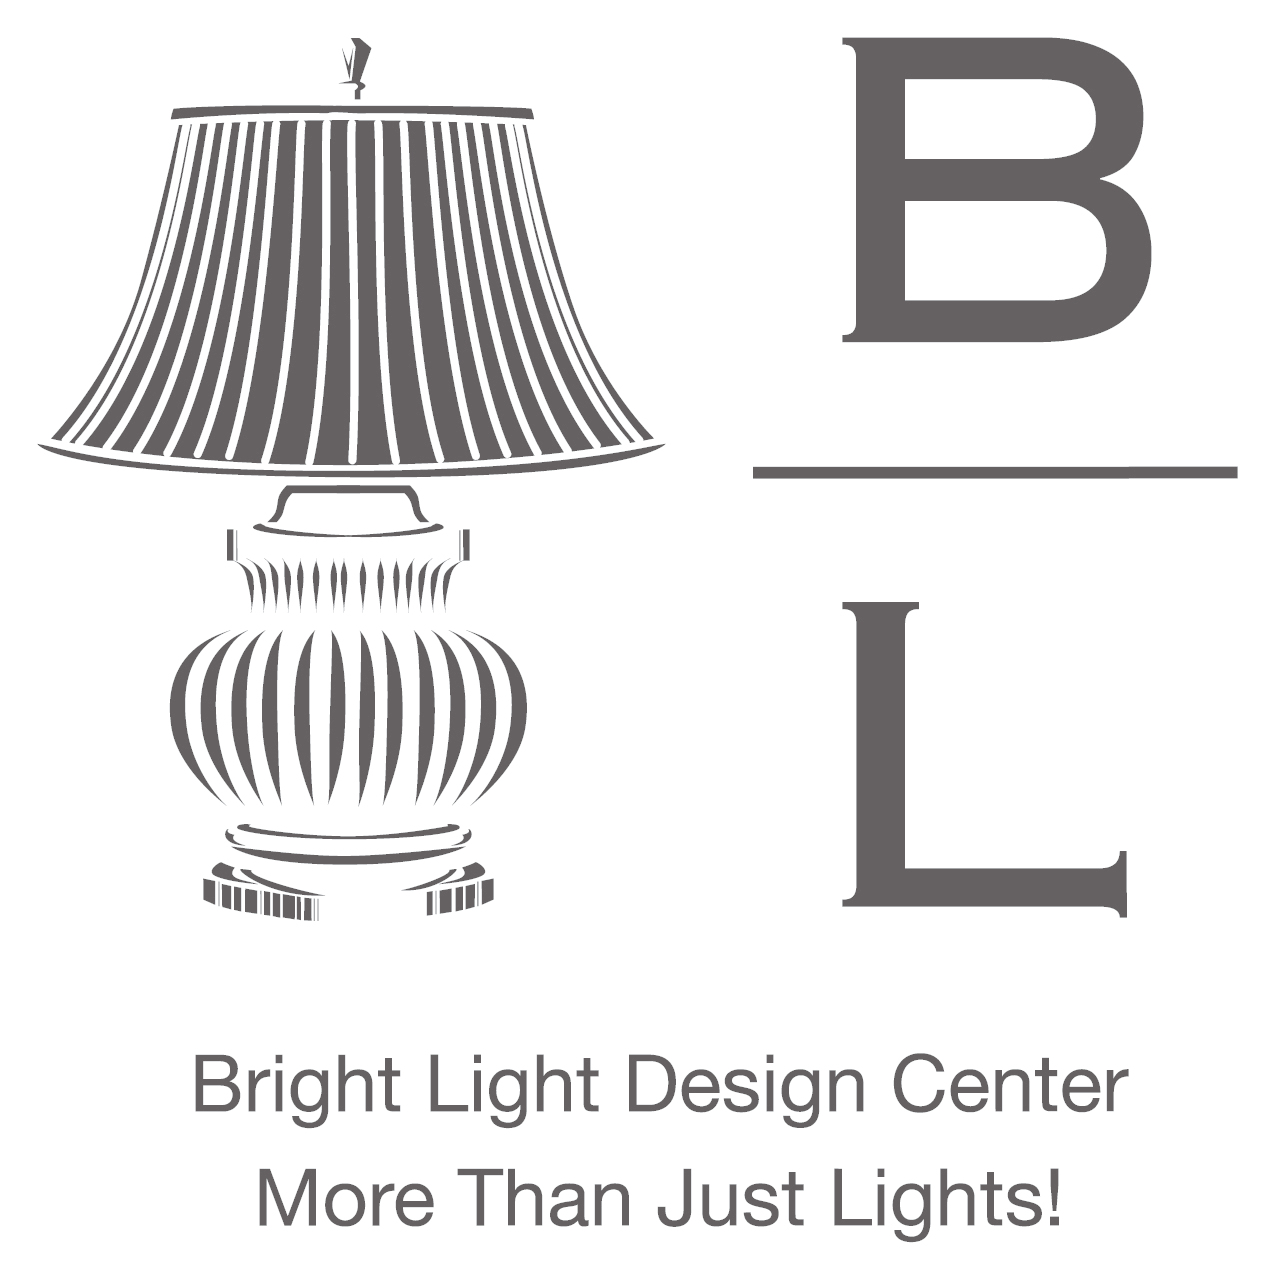 Bright Light Design Center